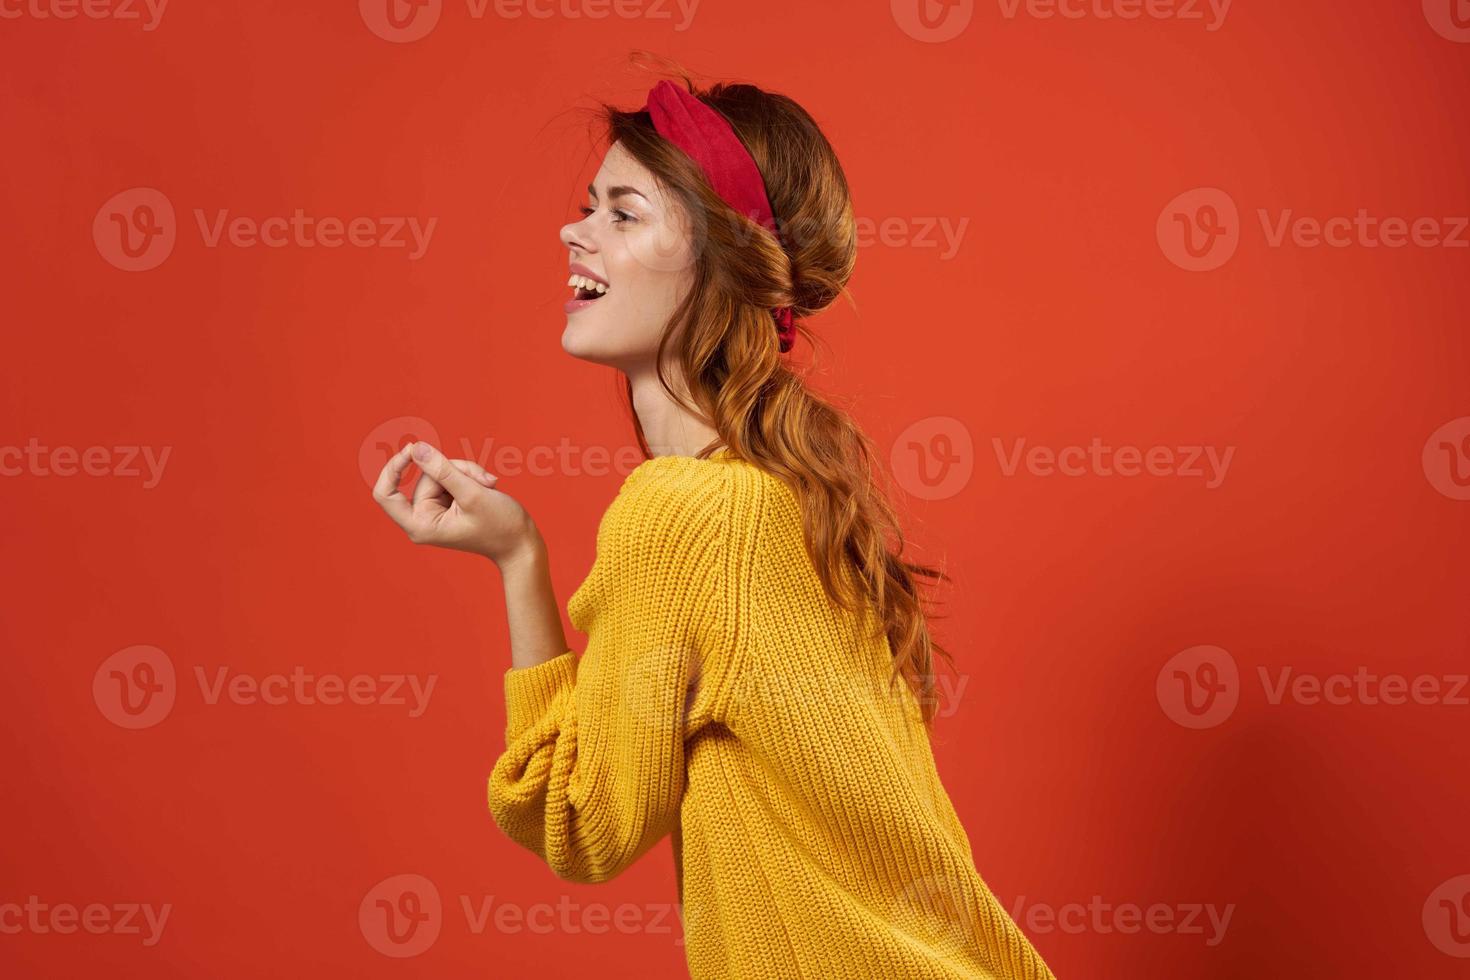 cheerful woman in yellow sweater red headband decoration fashion street style photo